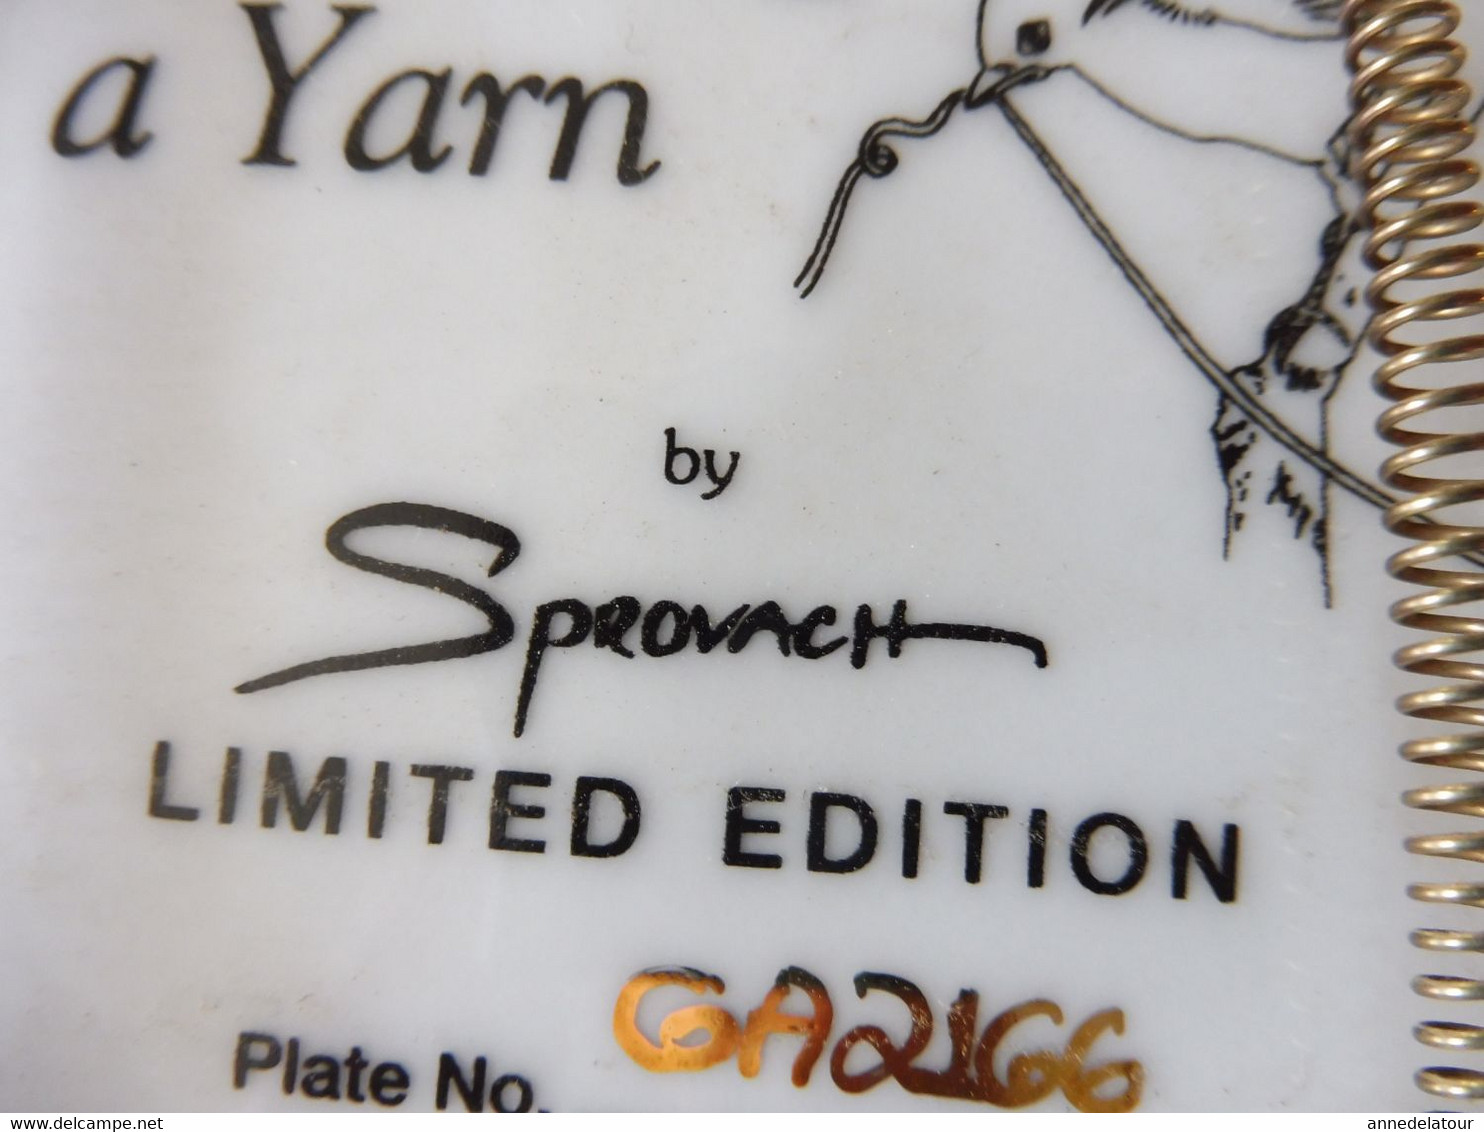 ASSIETTE décorative  CHATS et OISEAUX  édition limitée N° GA 2166  signé Sprovach "SPINNING a YARN"